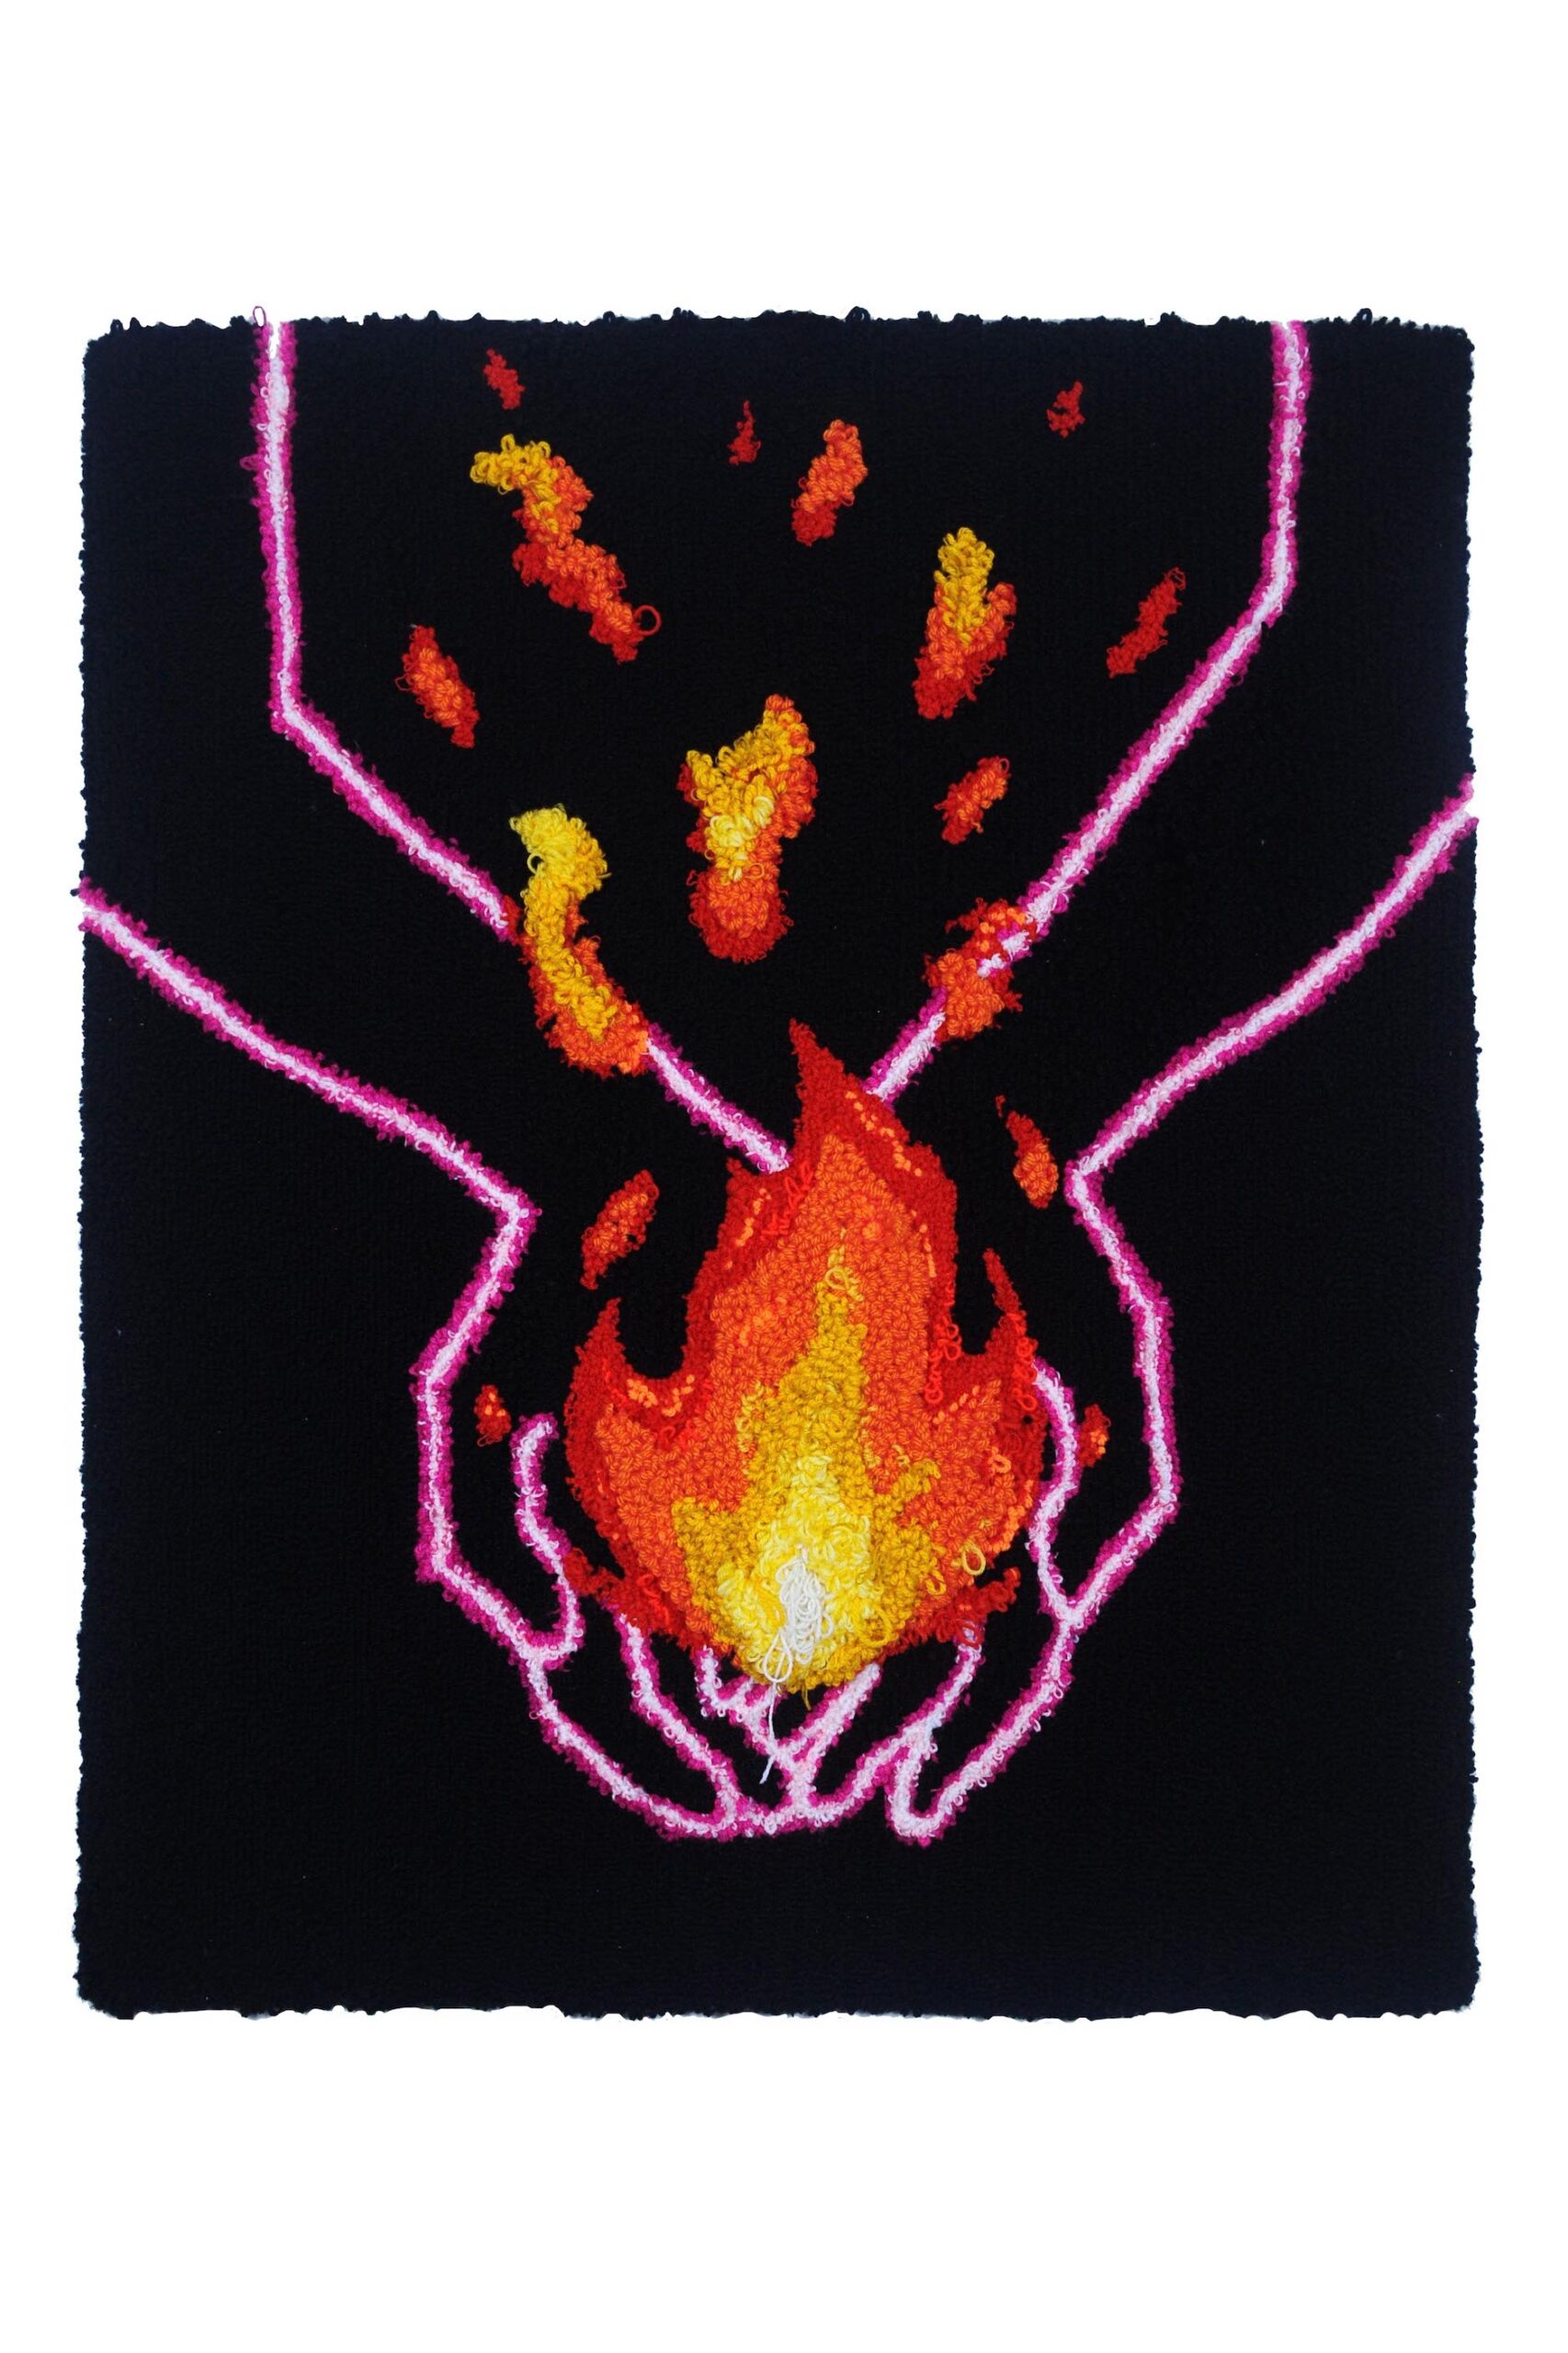 Red flame cradled in outline of hands in pink against black backdrop